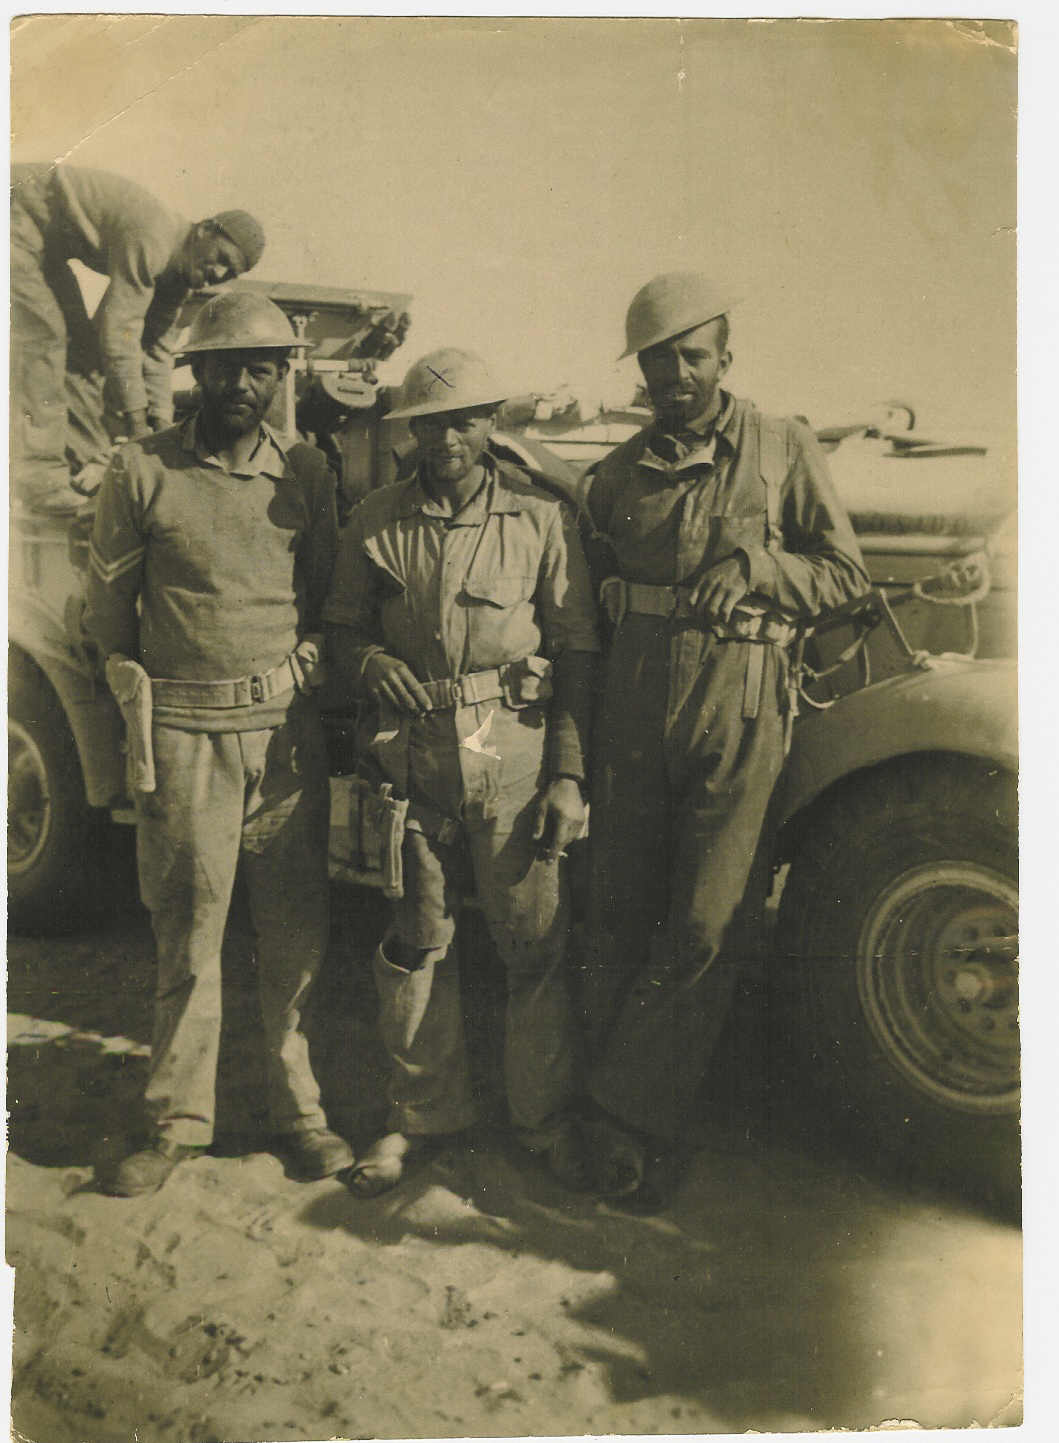 T Patrol group 1940